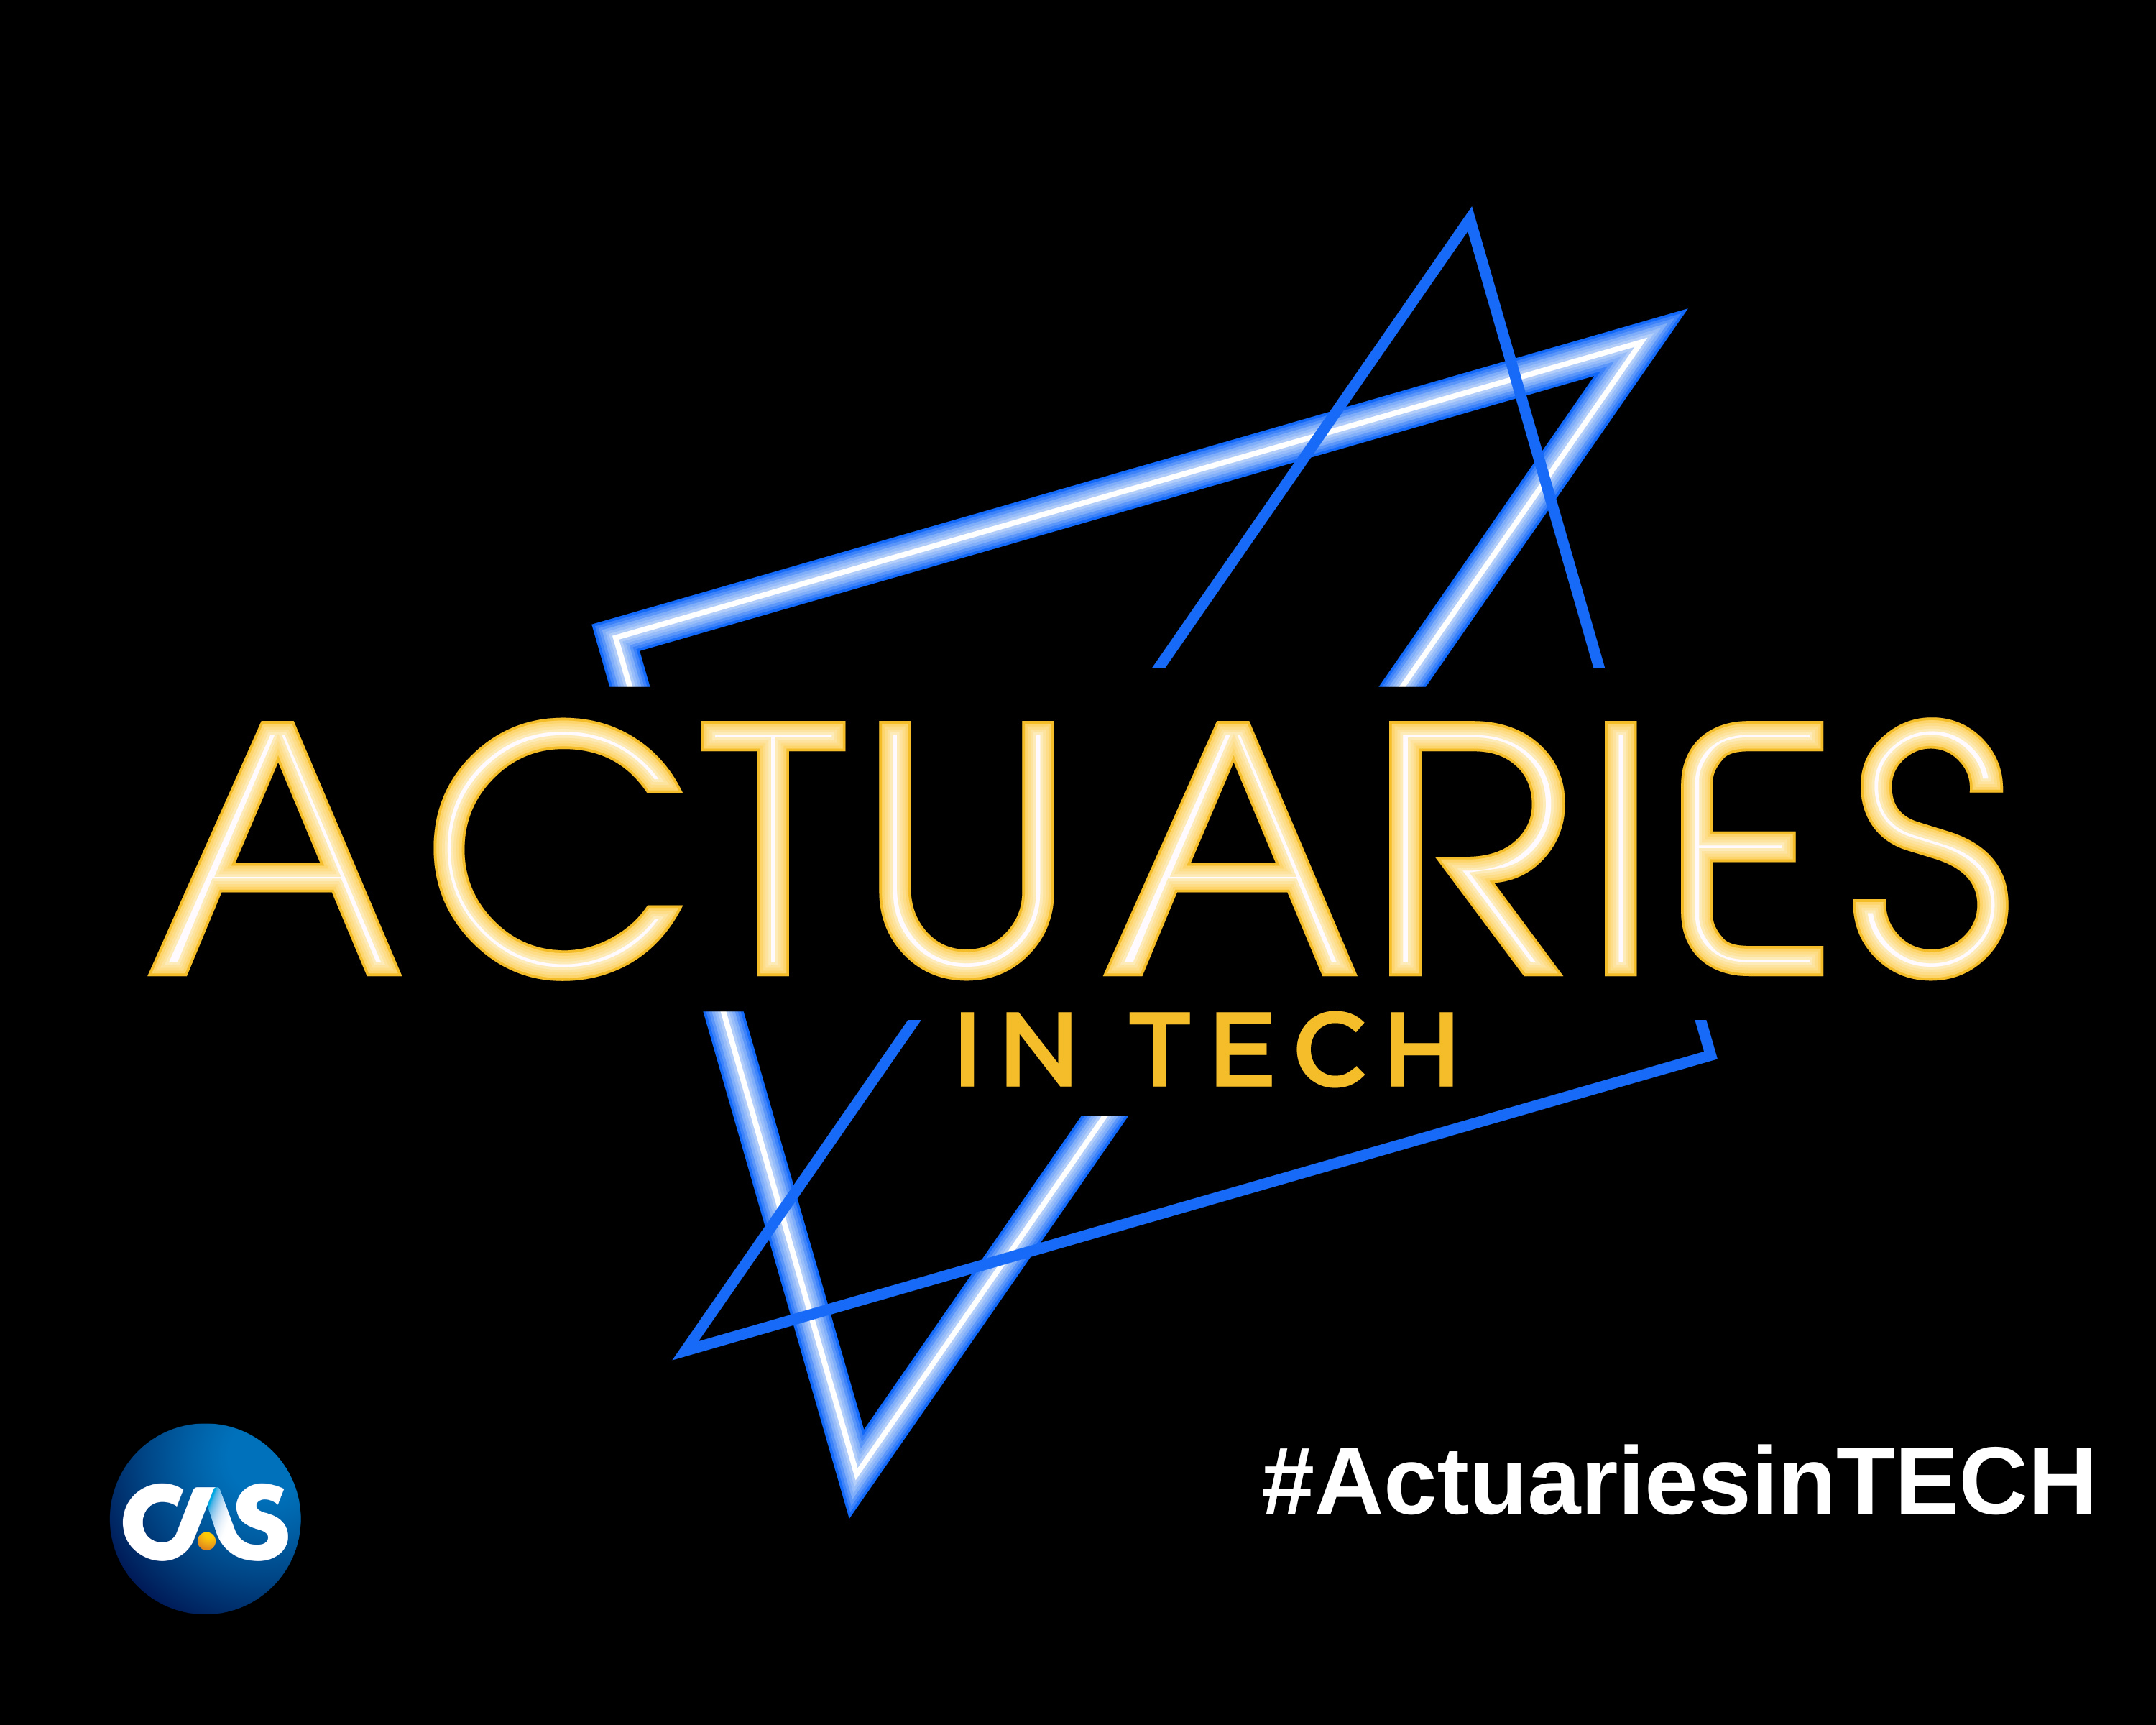 Actuaries in Tech Campaign logo